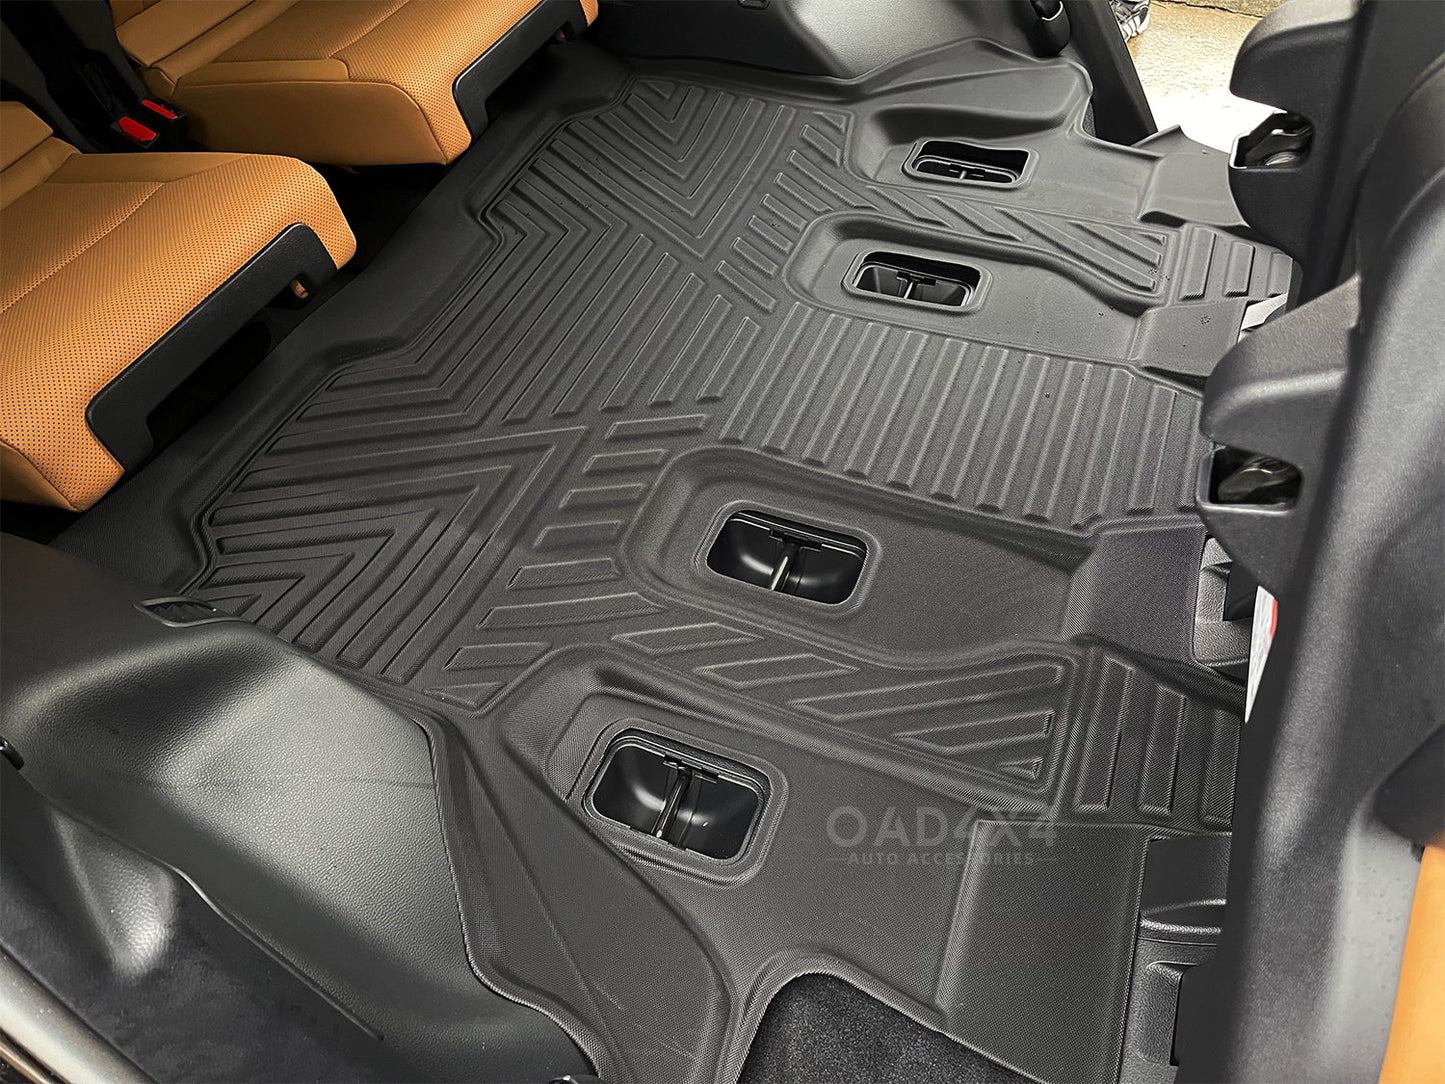 3Rows Floor Mats fits Lexus LX500d LX600 7Seats 2021-Onwards Tailored TPE 5D Door Sill Covered Floor Mat Liner